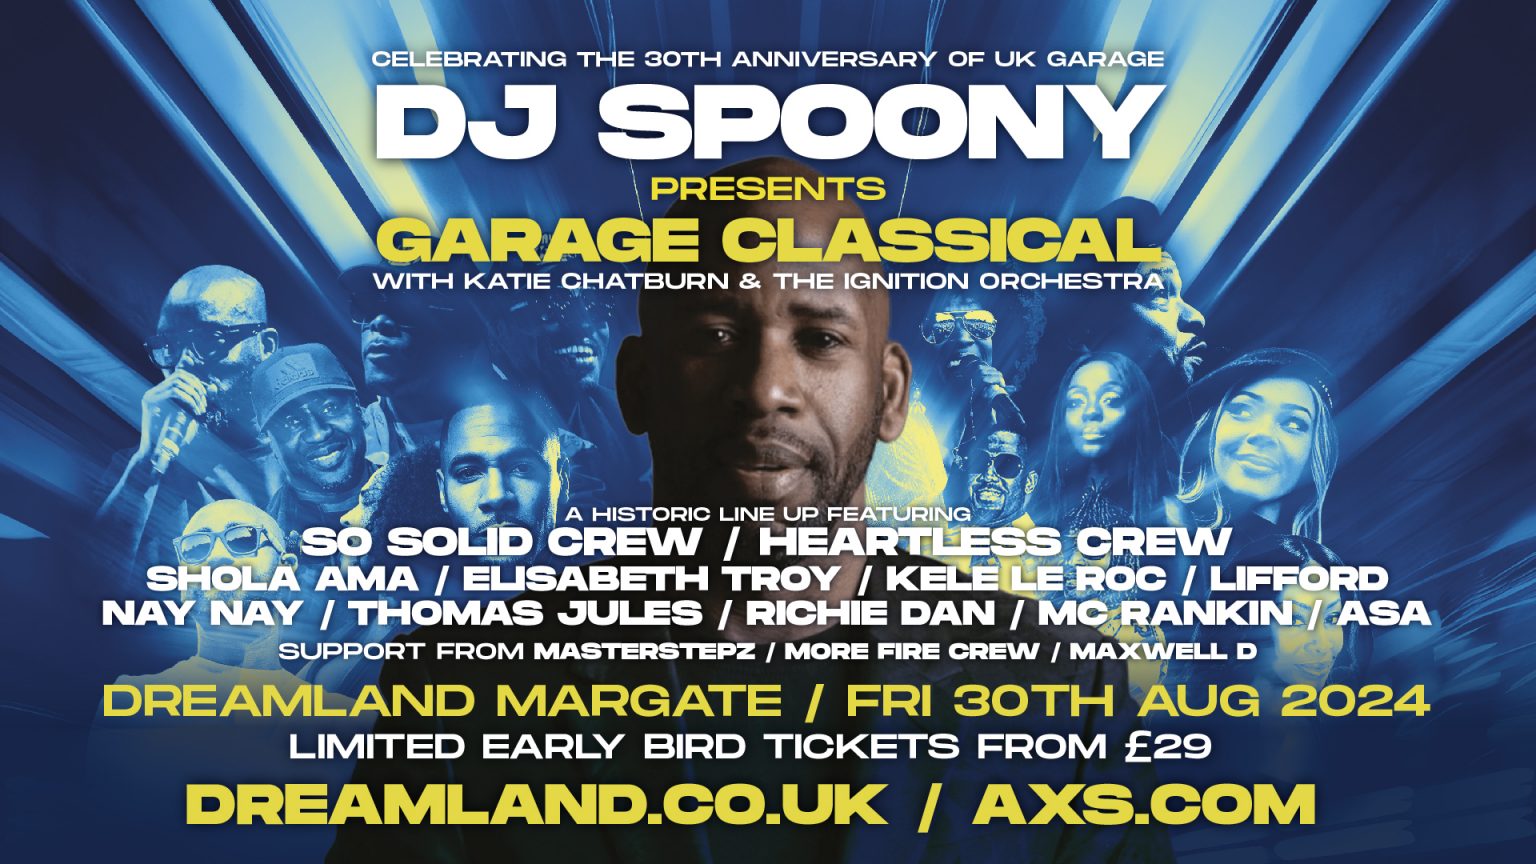 DJ Spoony